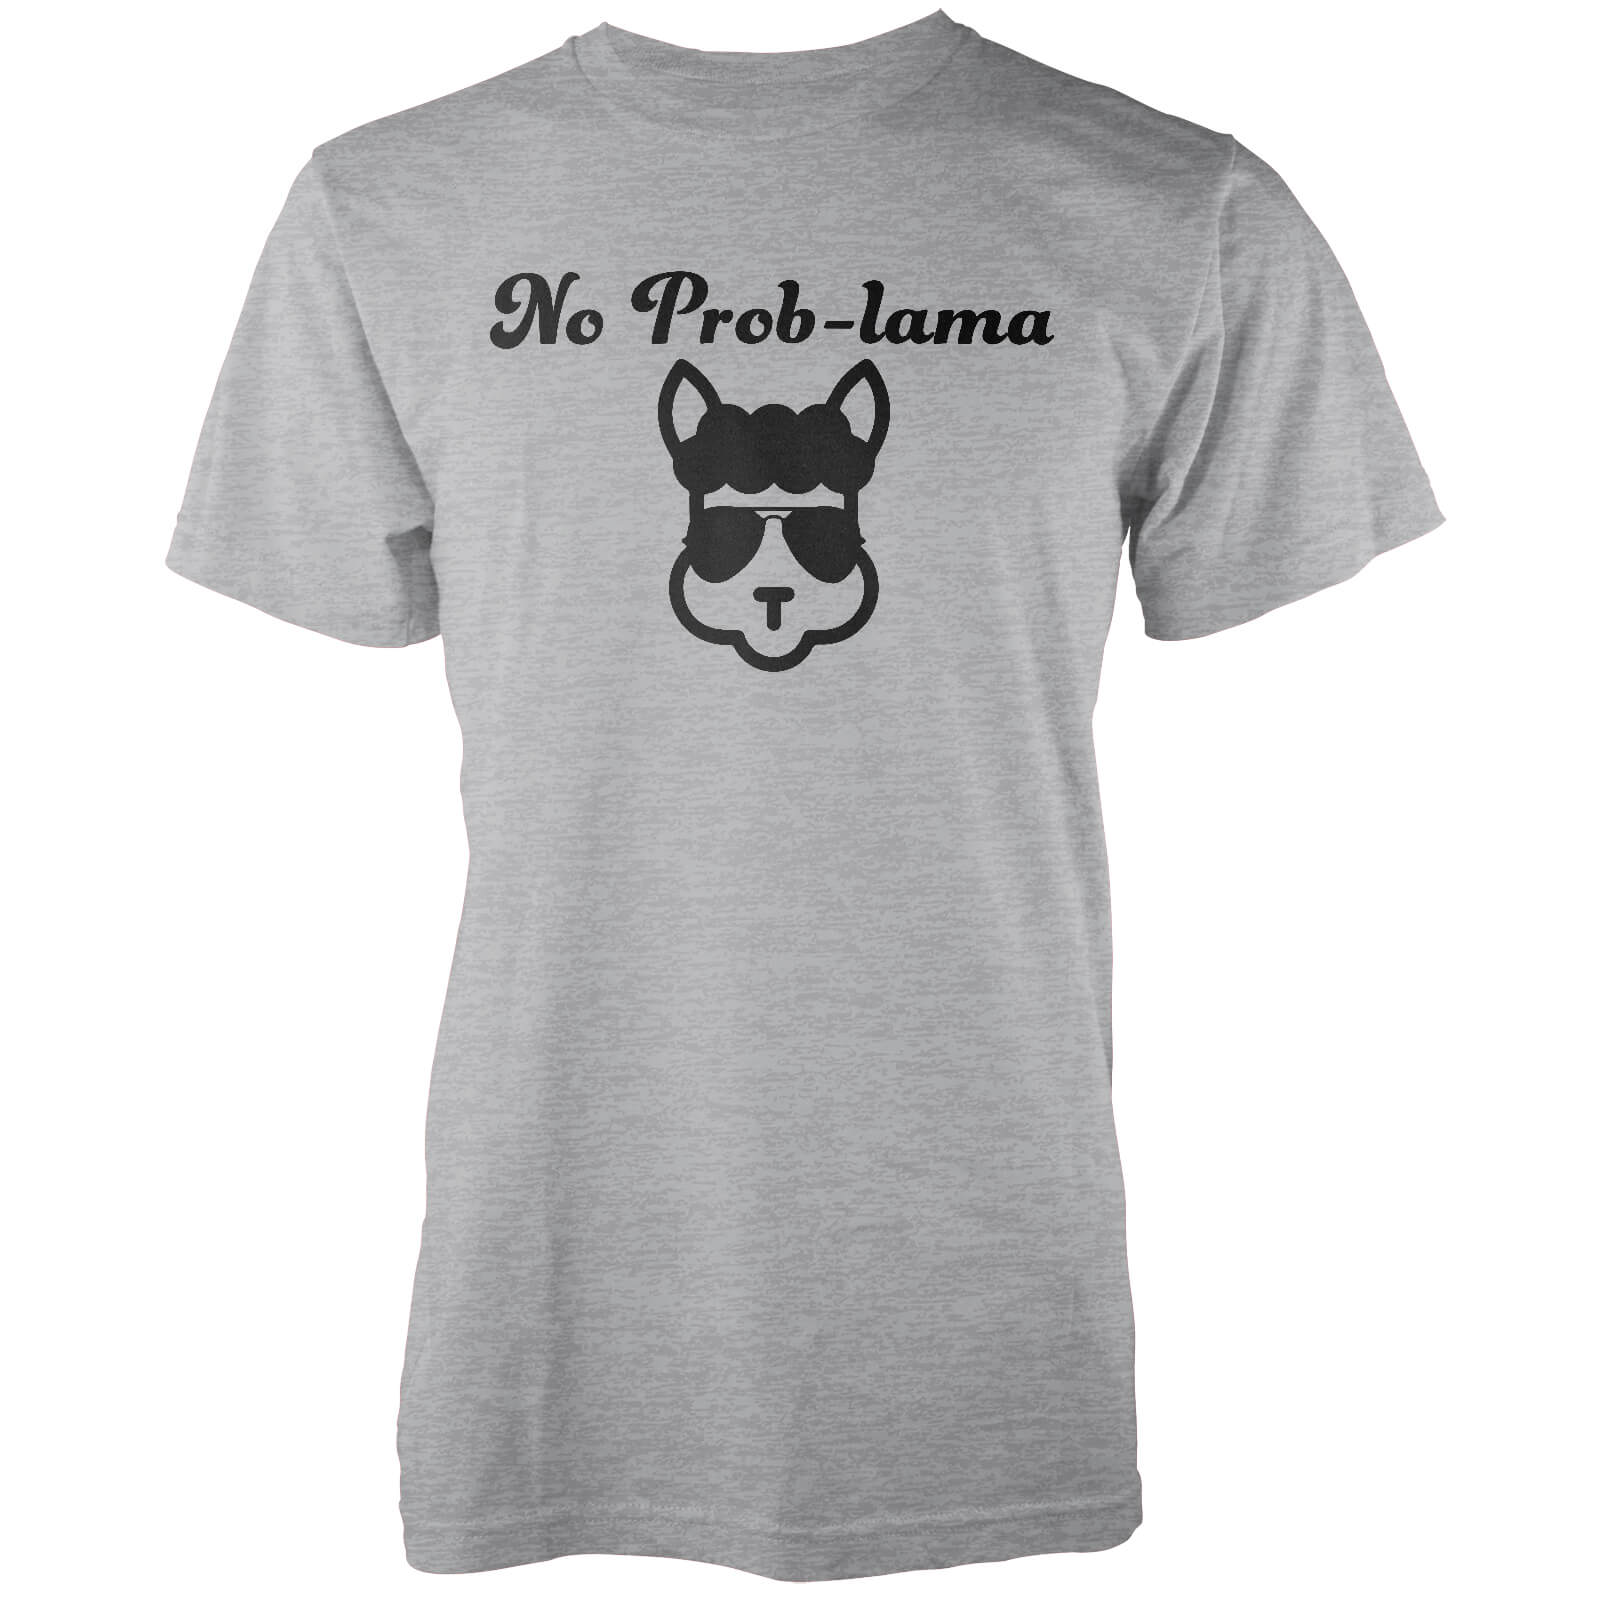 No Prob-Lama Grey T-Shirt - M - Grey